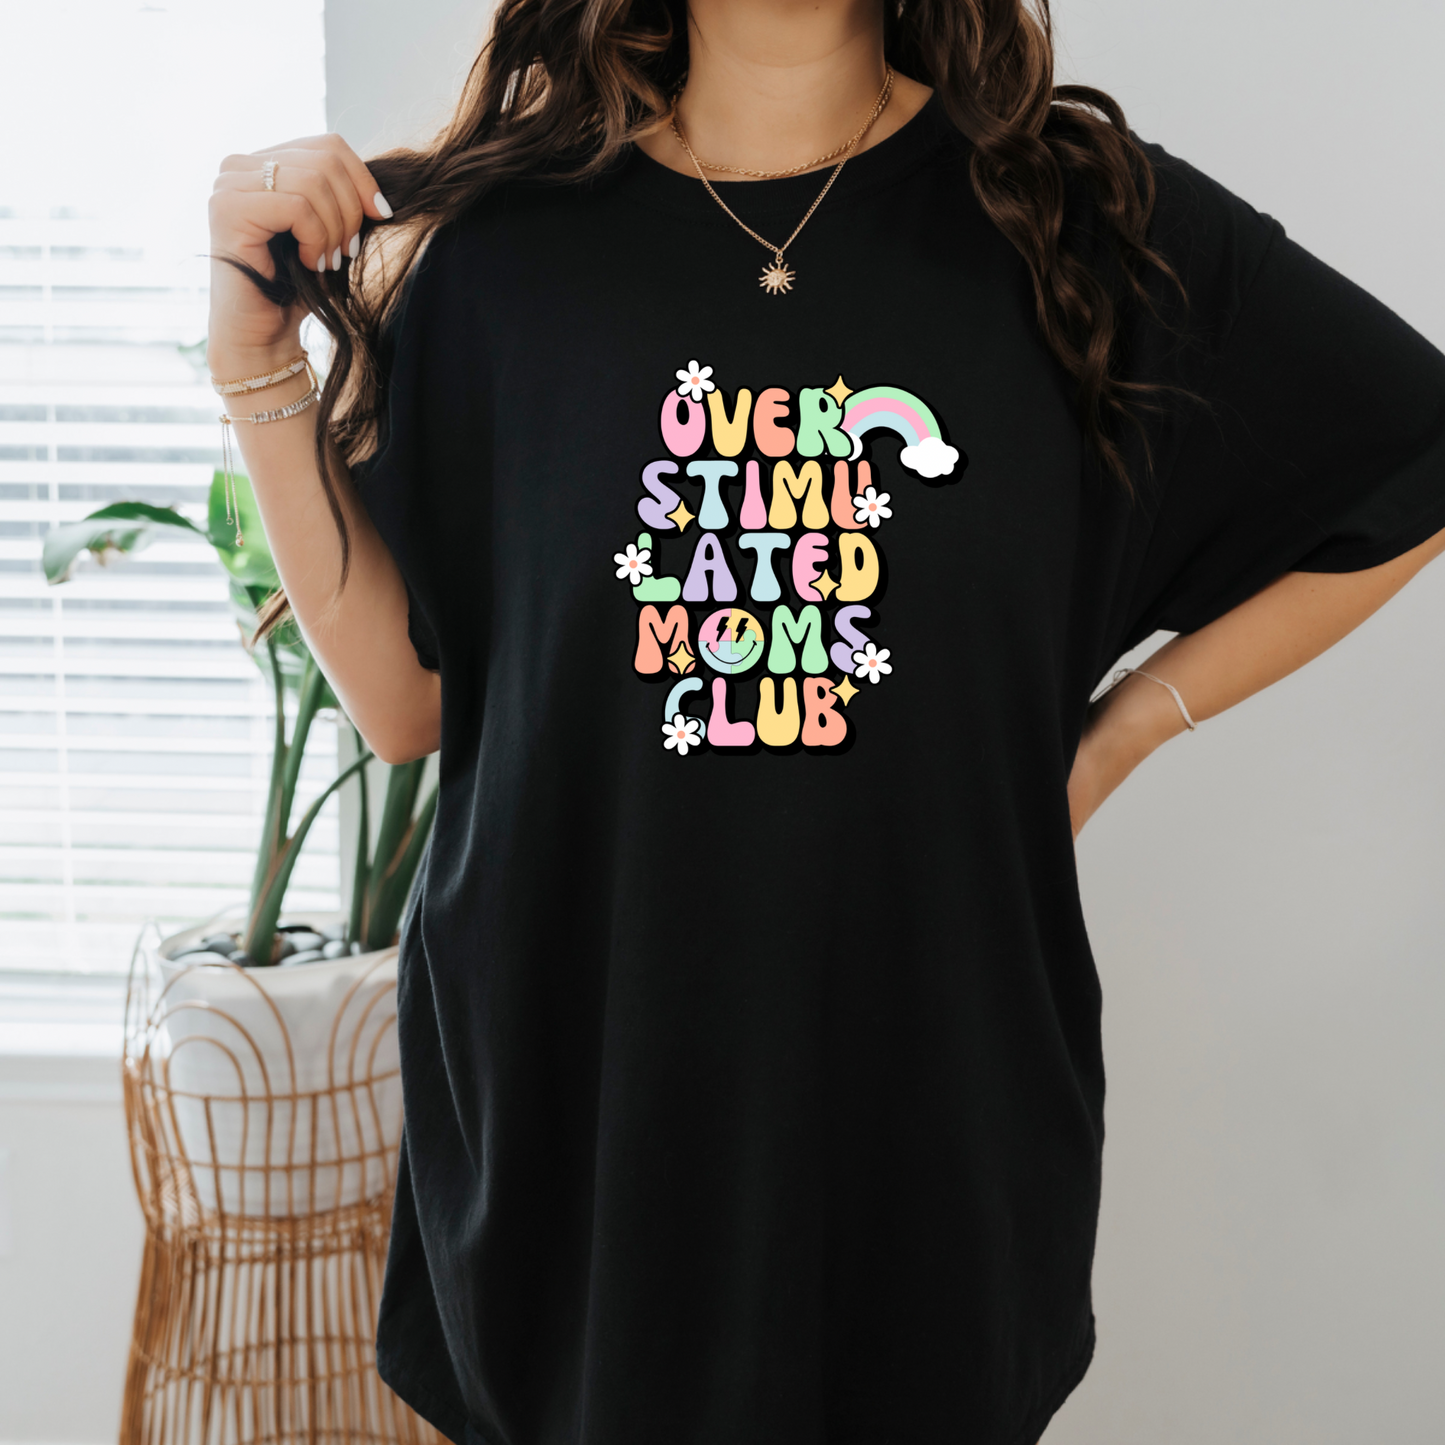 Overstimulated moms club shirt/sweatshirt